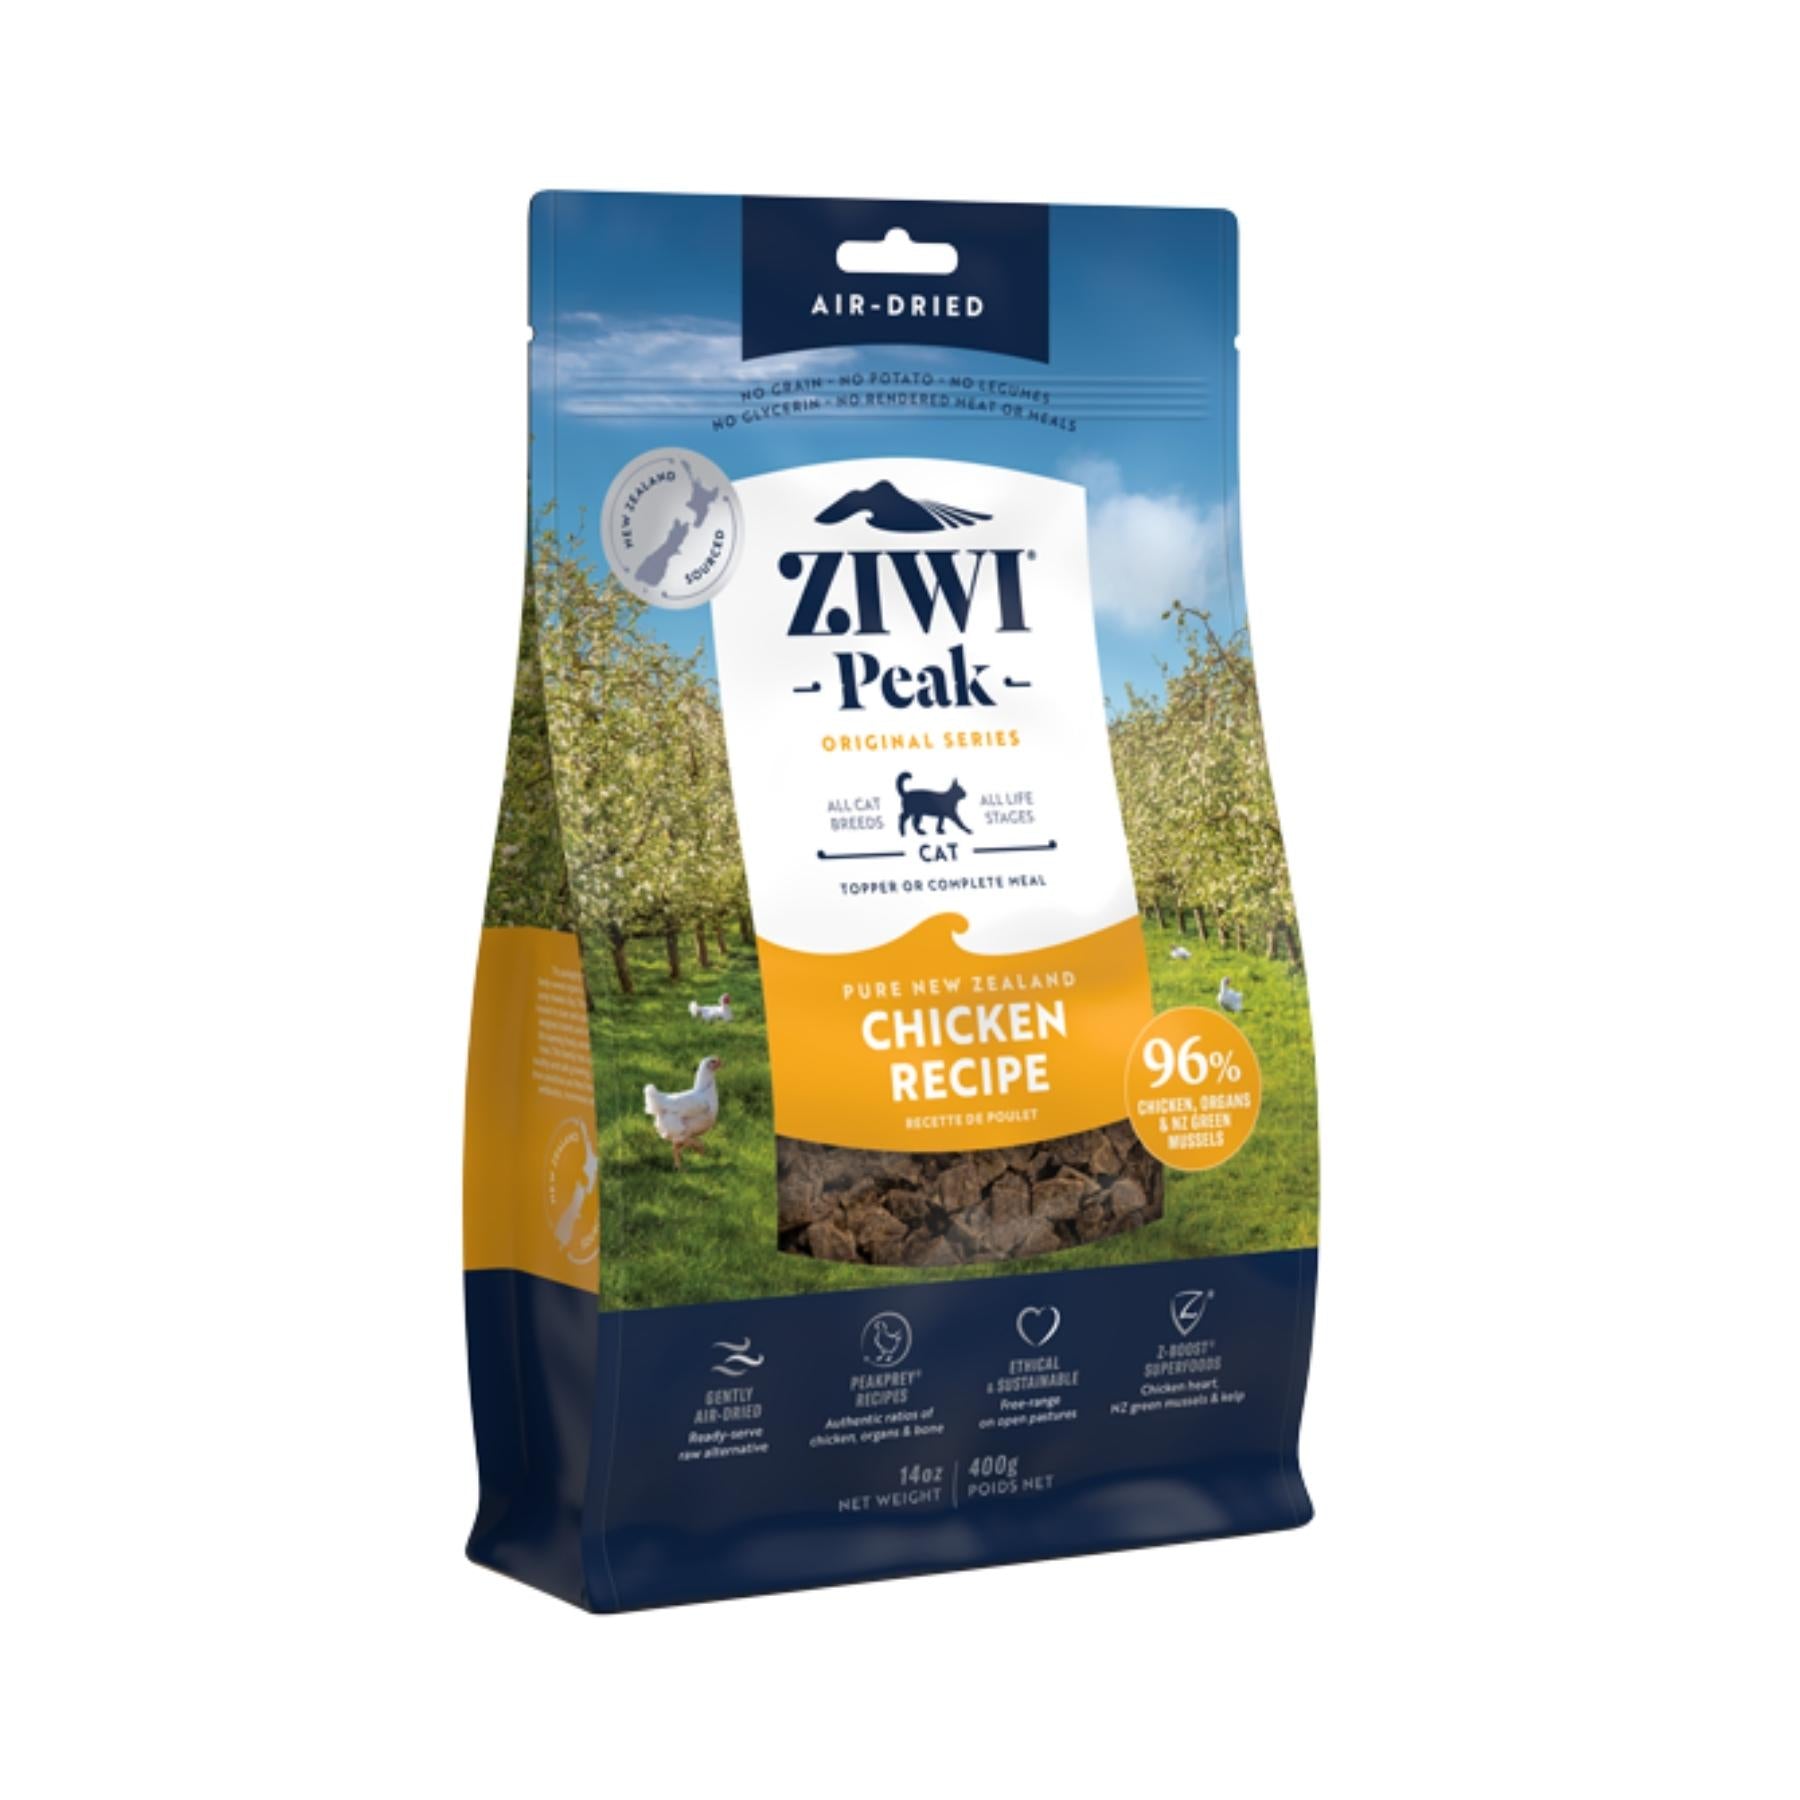 ZIWI Peak Dry Cat Food Chicken Recipe 400g bag - front view.